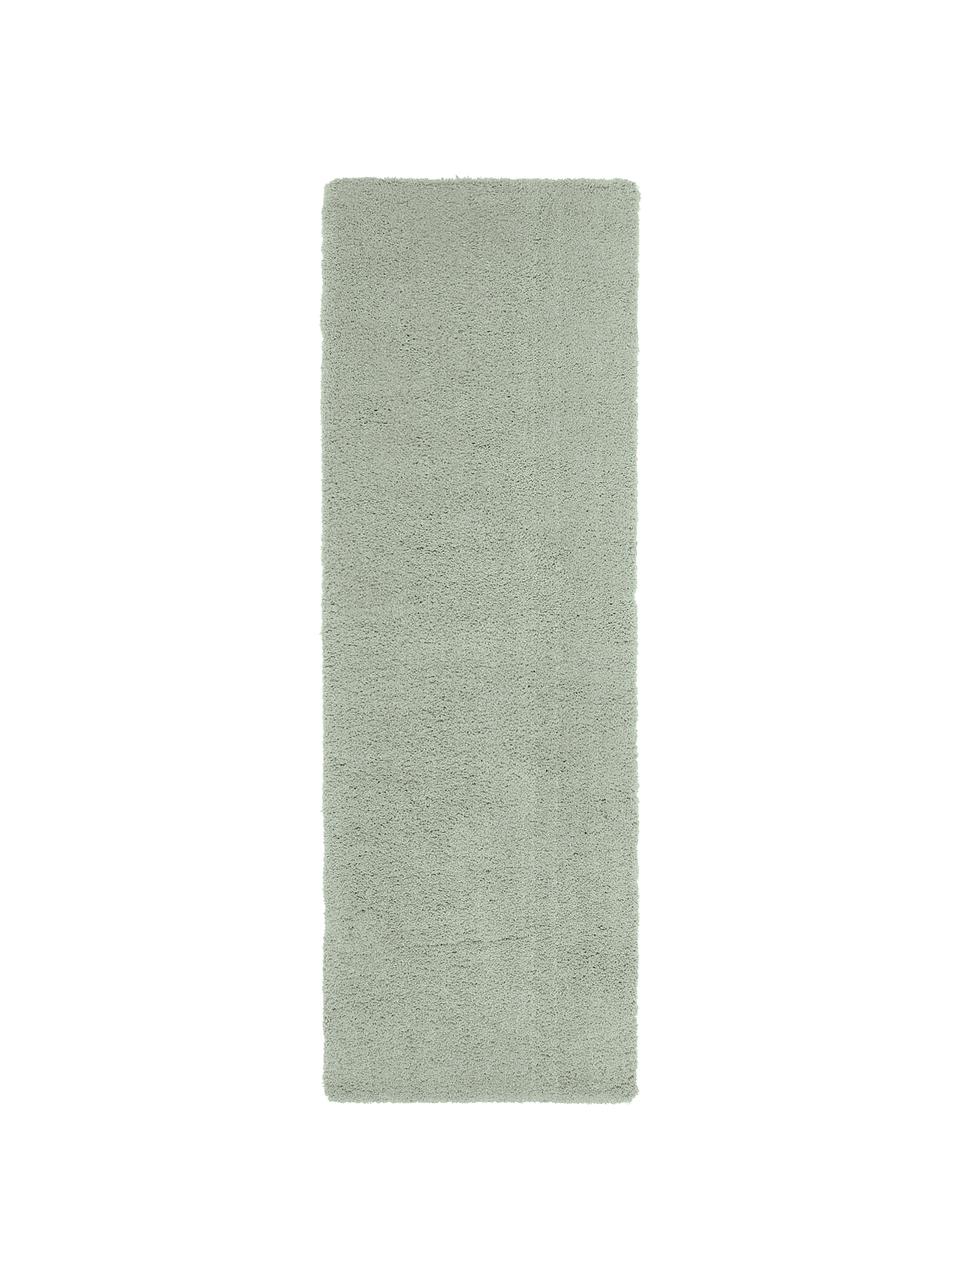 Flauschiger Hochflor-Läufer Leighton in Mintgrün, Flor: Mikrofaser (100% Polyeste, Mintgrün, B 80 x L 250 cm